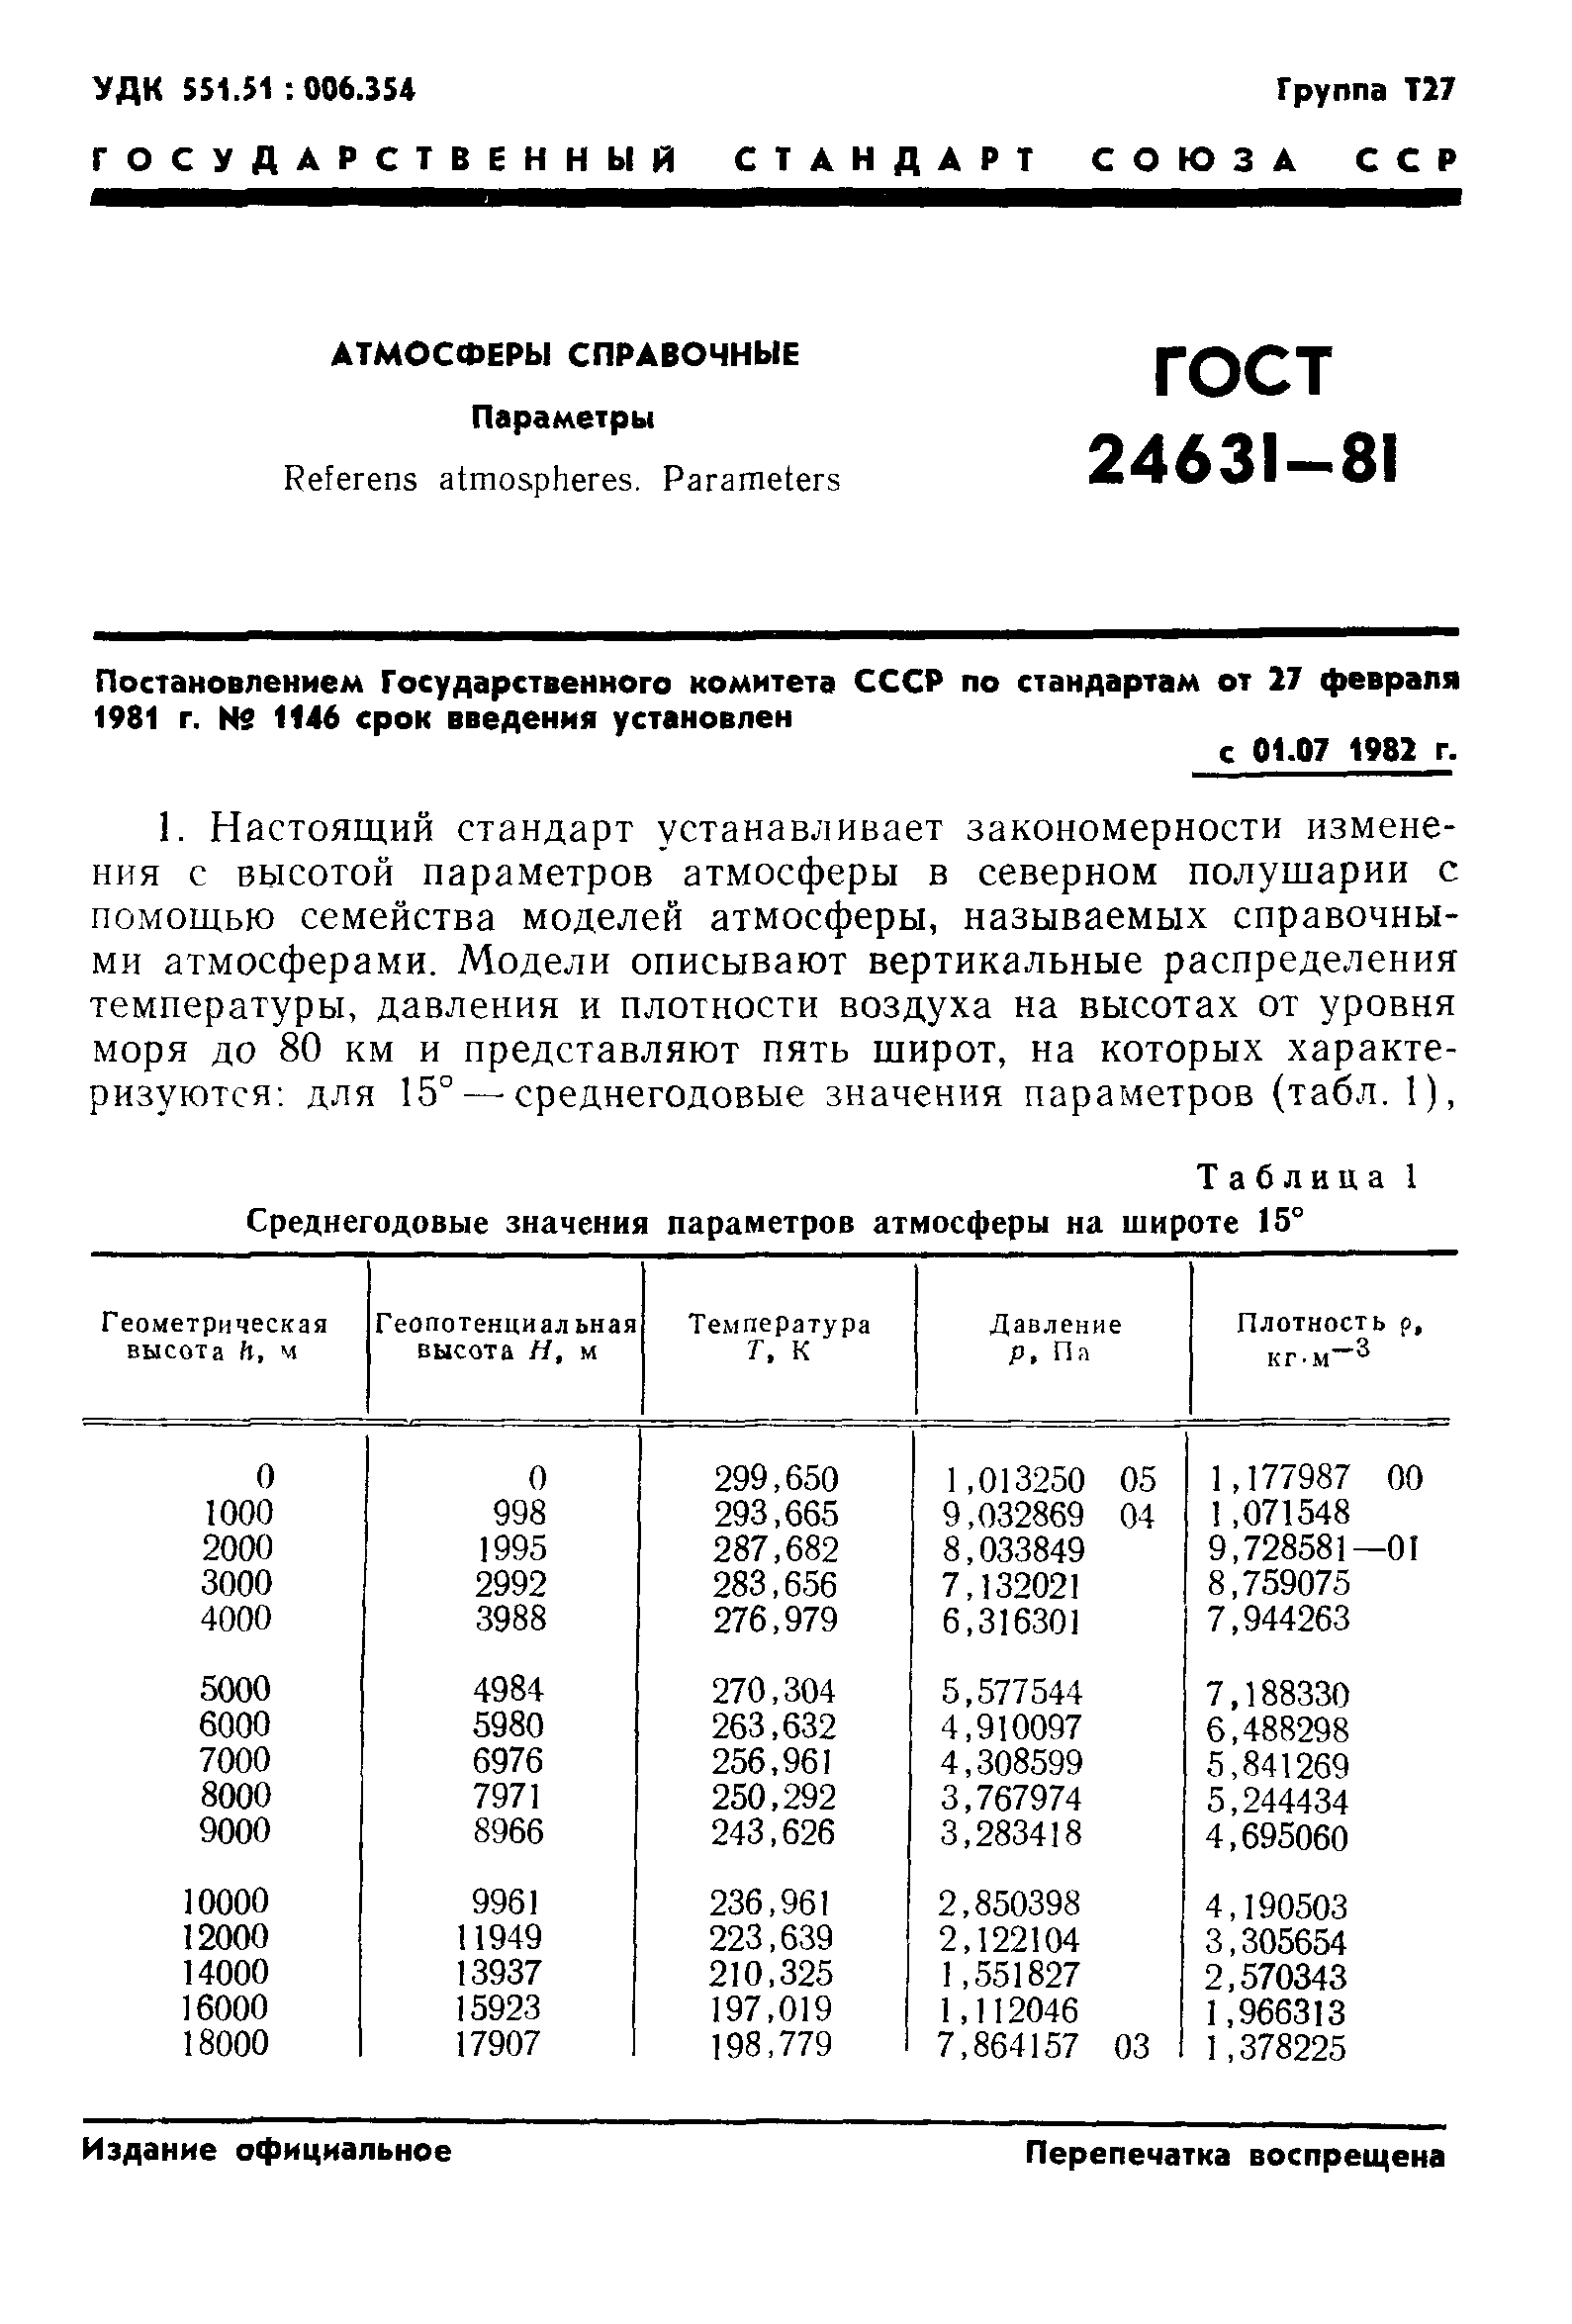 ГОСТ 24631-81